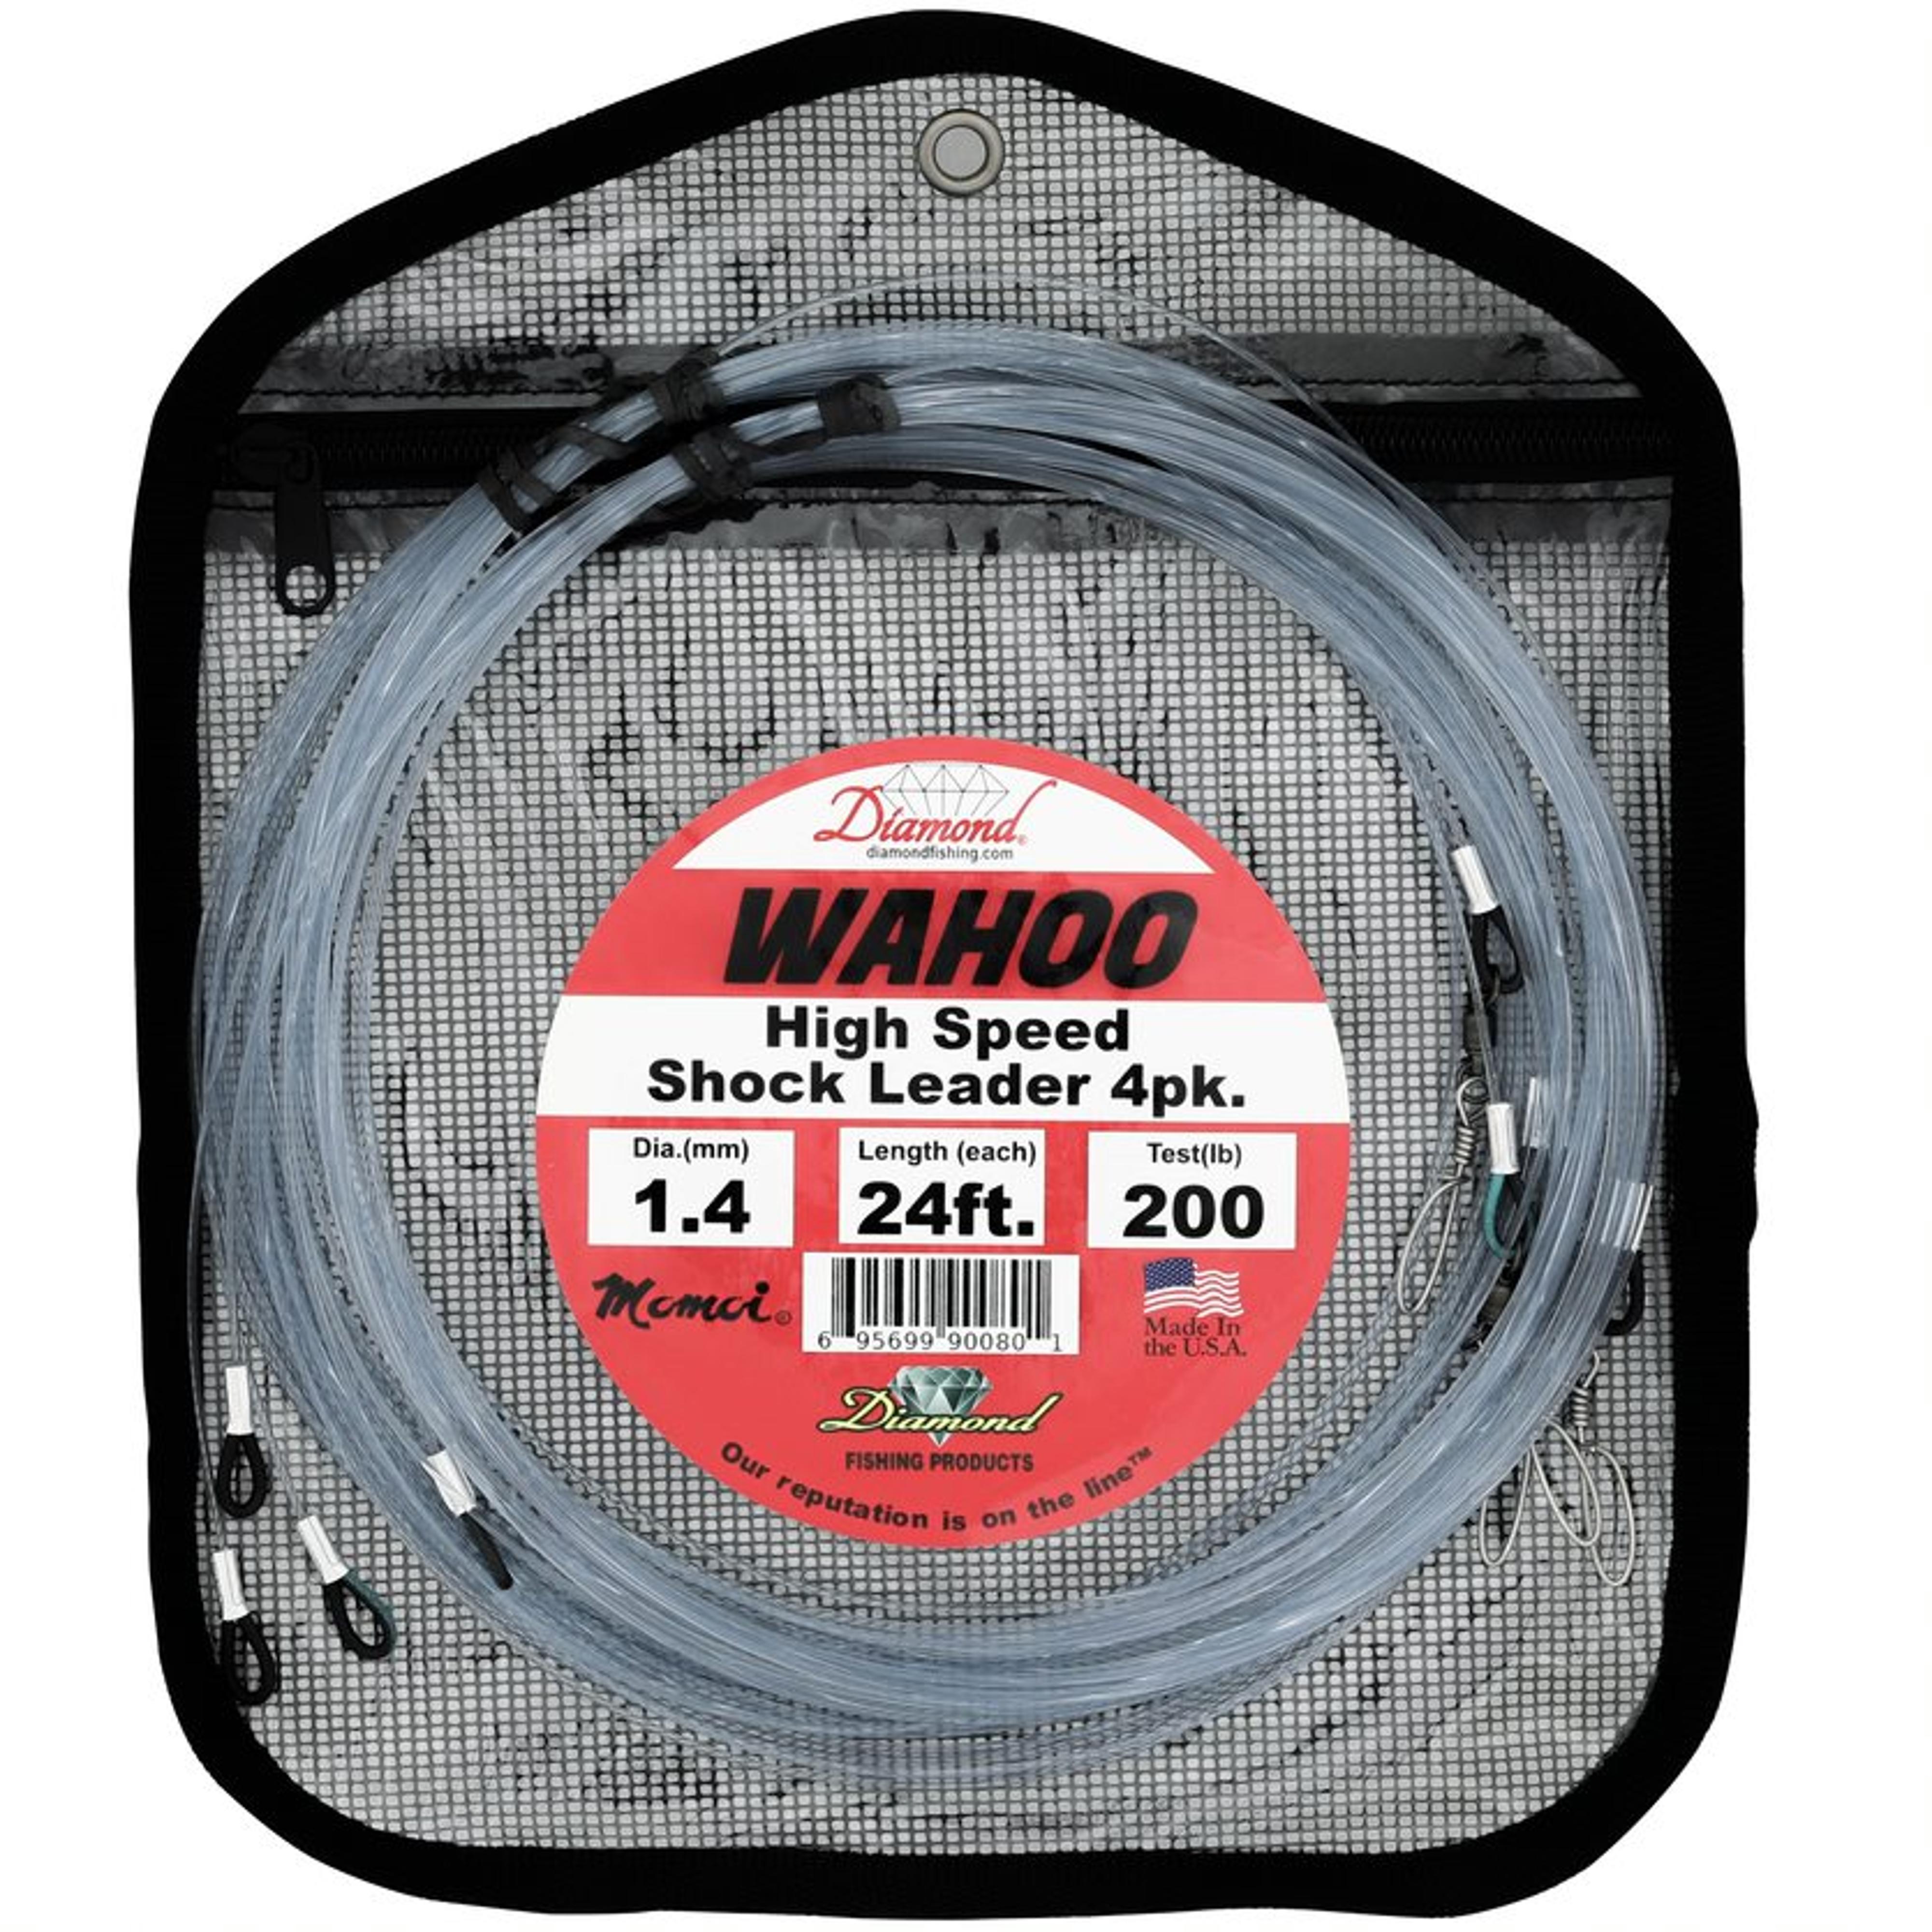 Buy Diamond Fishing Products Wahoo High Speed Shock Leaders